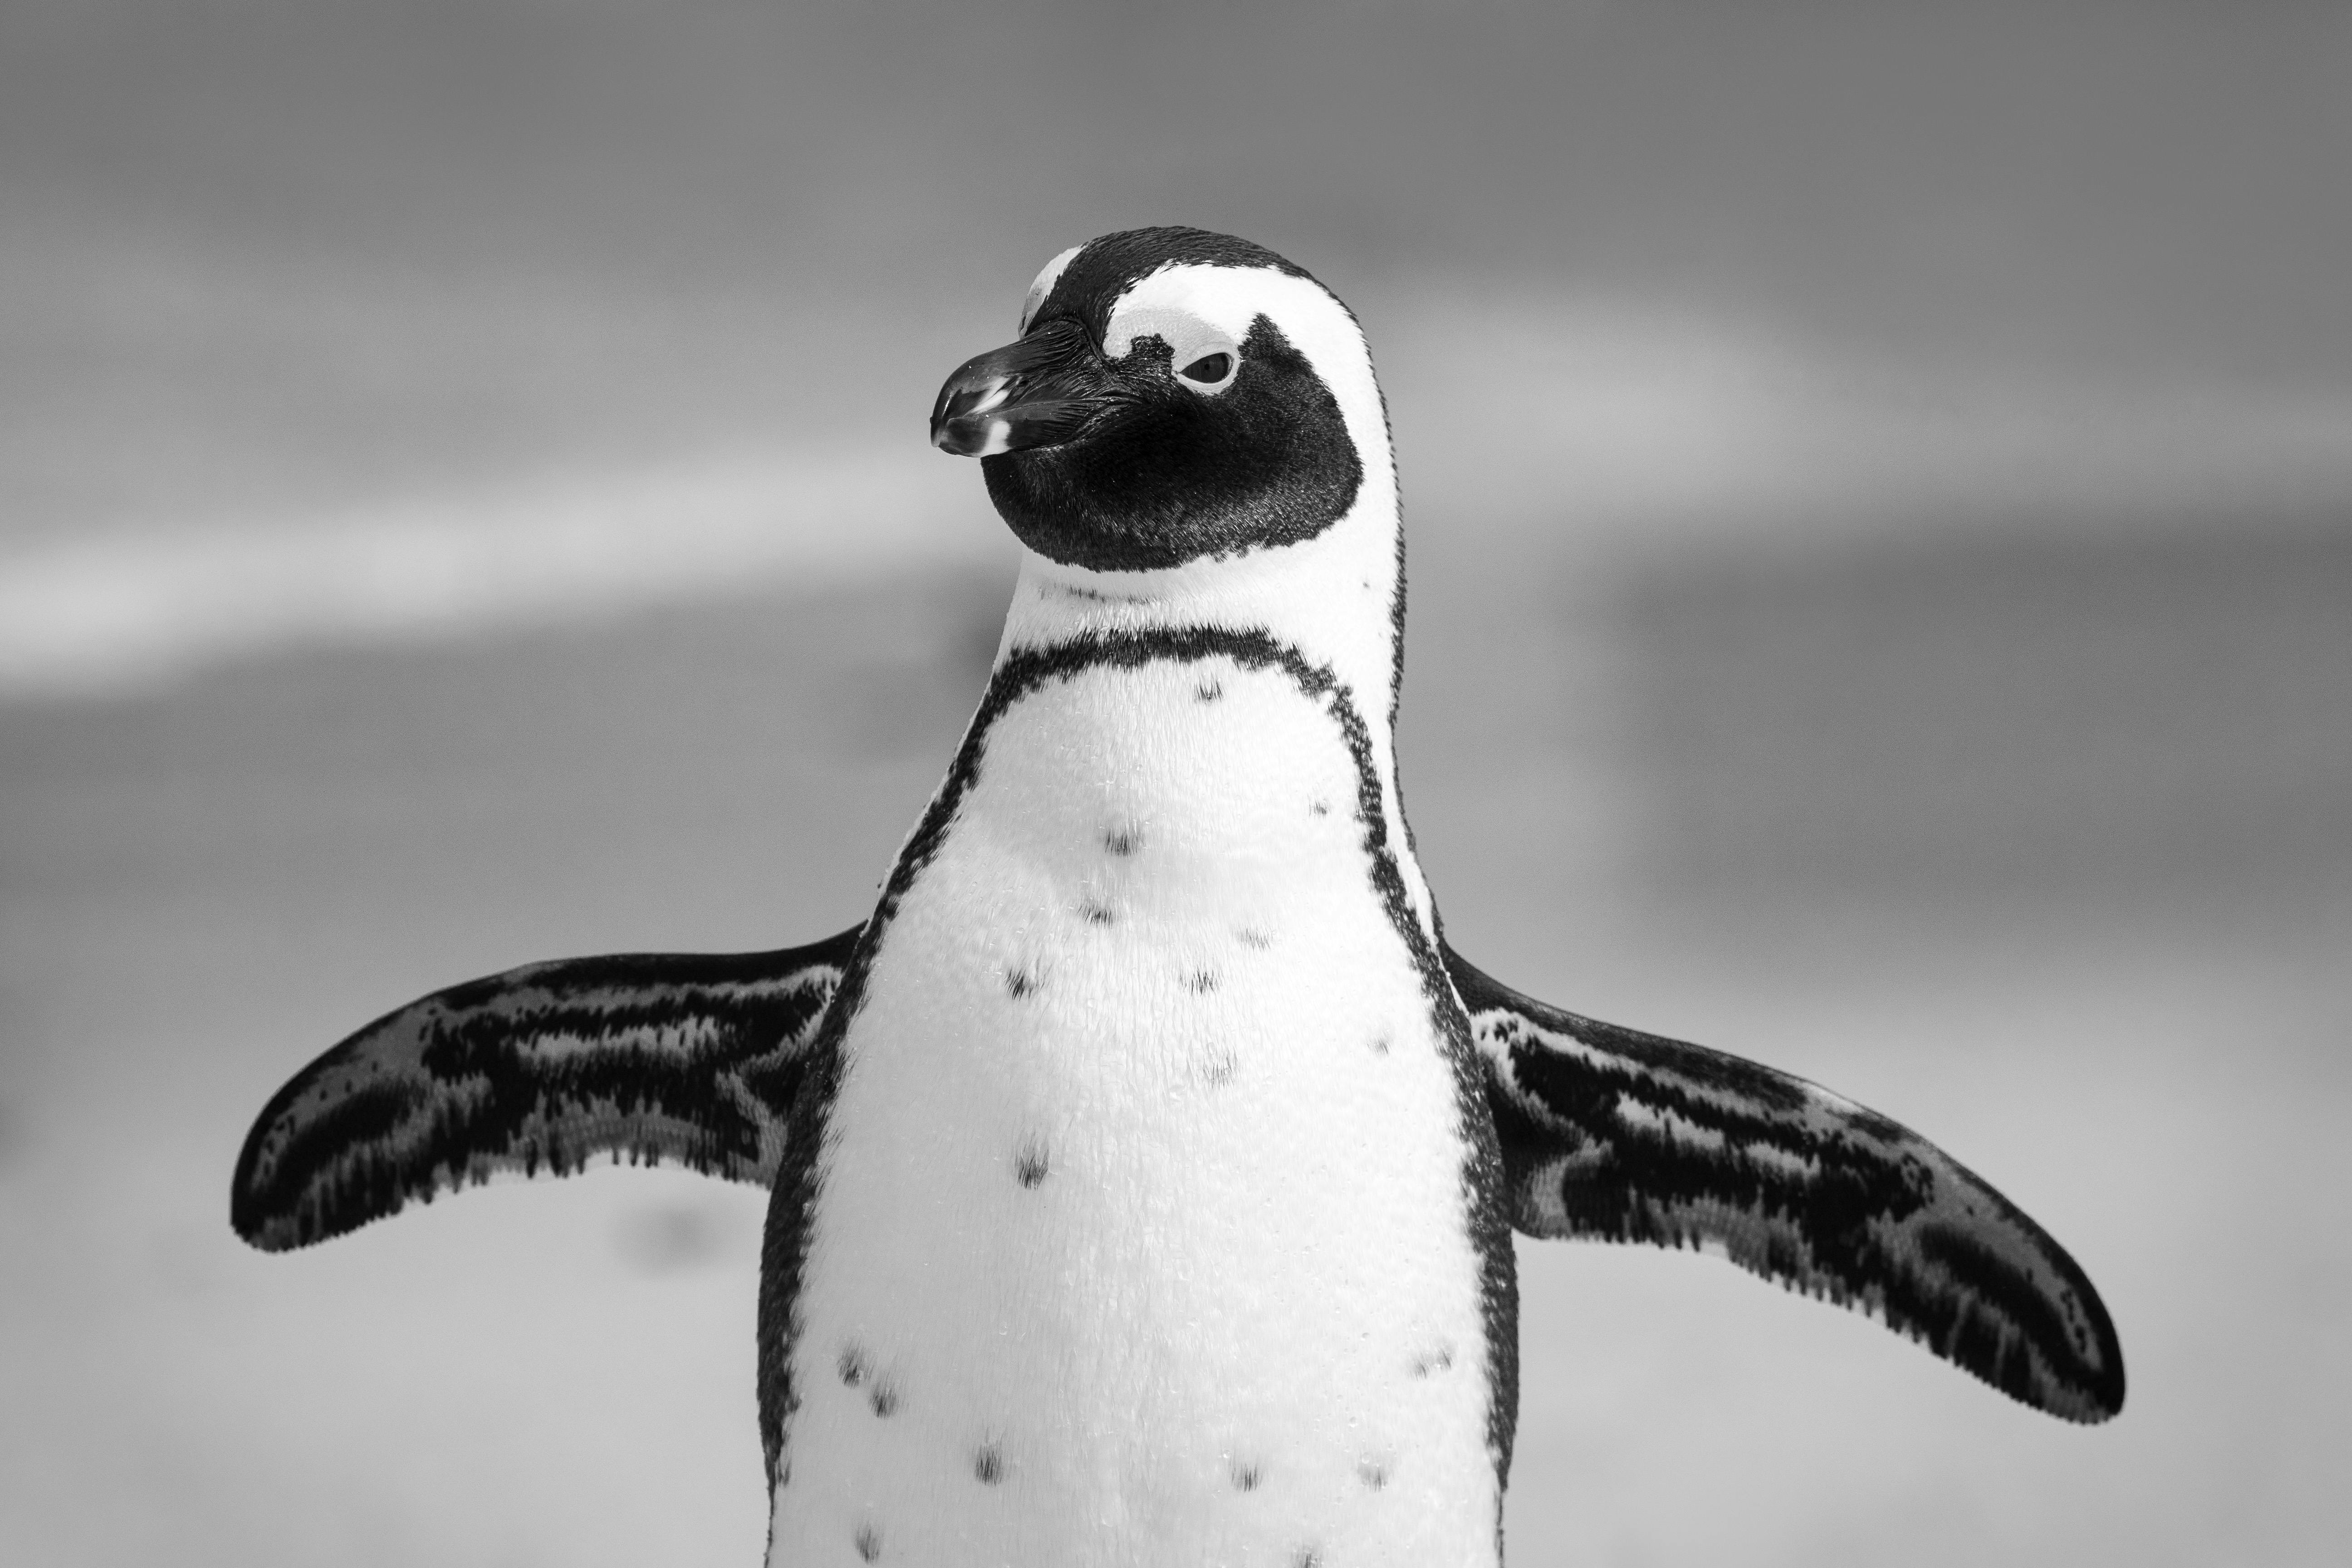 A close up photo of a penguin. | Source: Pexels